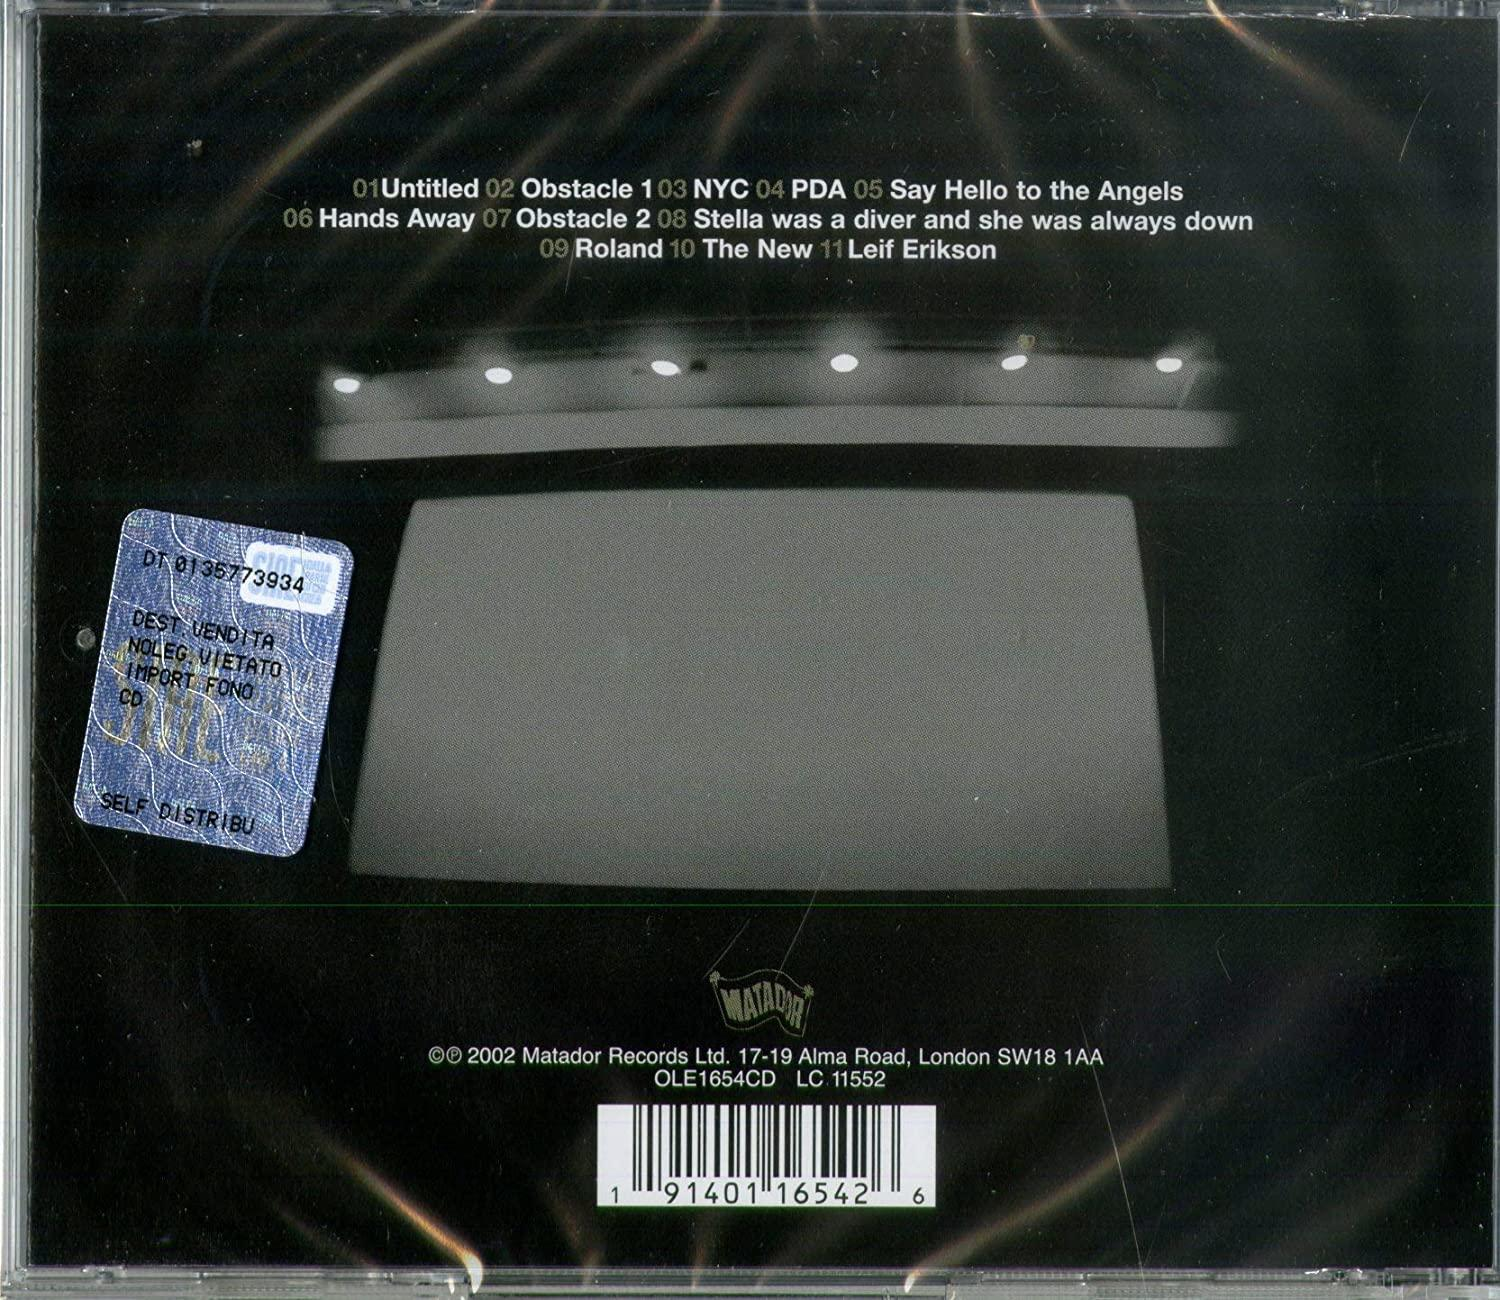 - On Interpol (CD) Bright Turn Lights - The